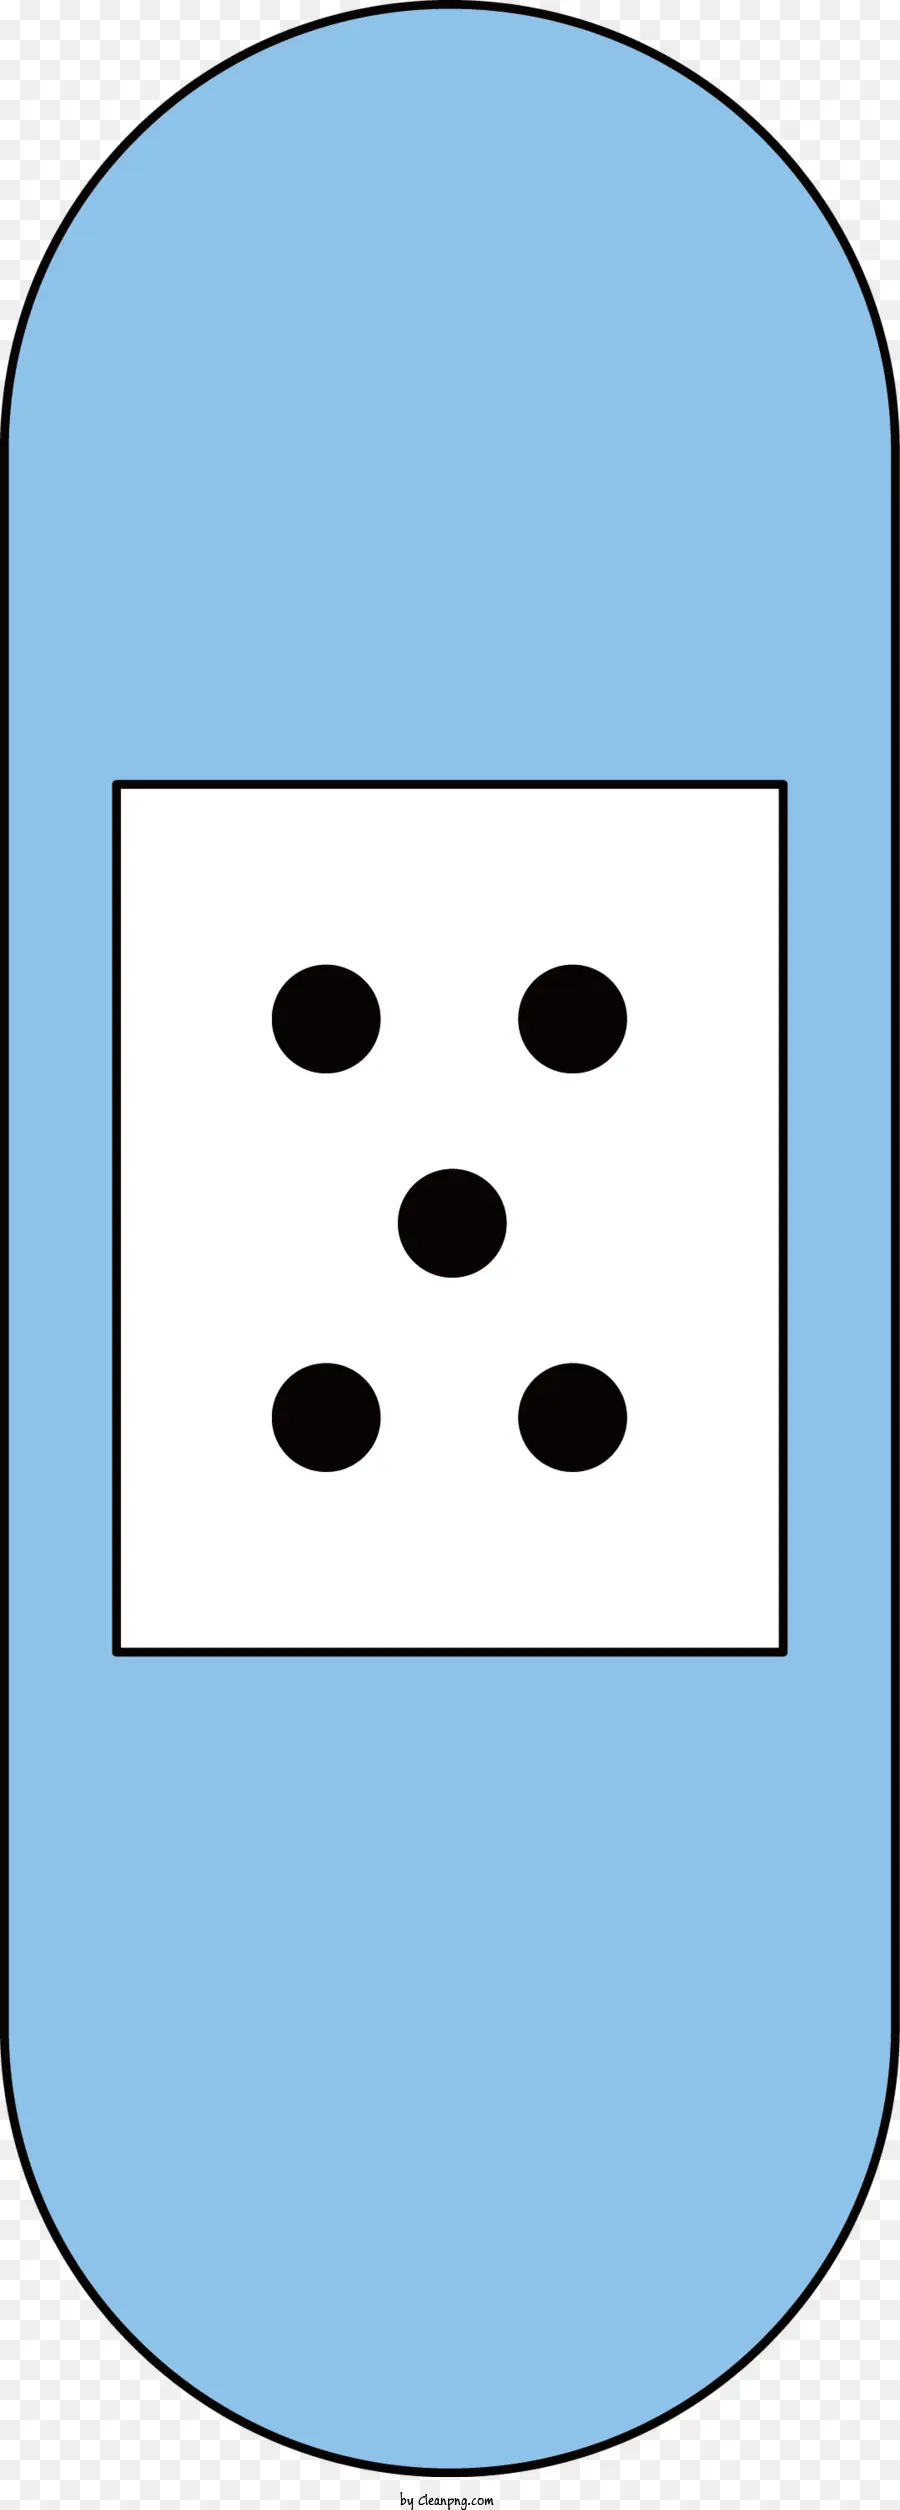 blue and white square black dot center white side blue side